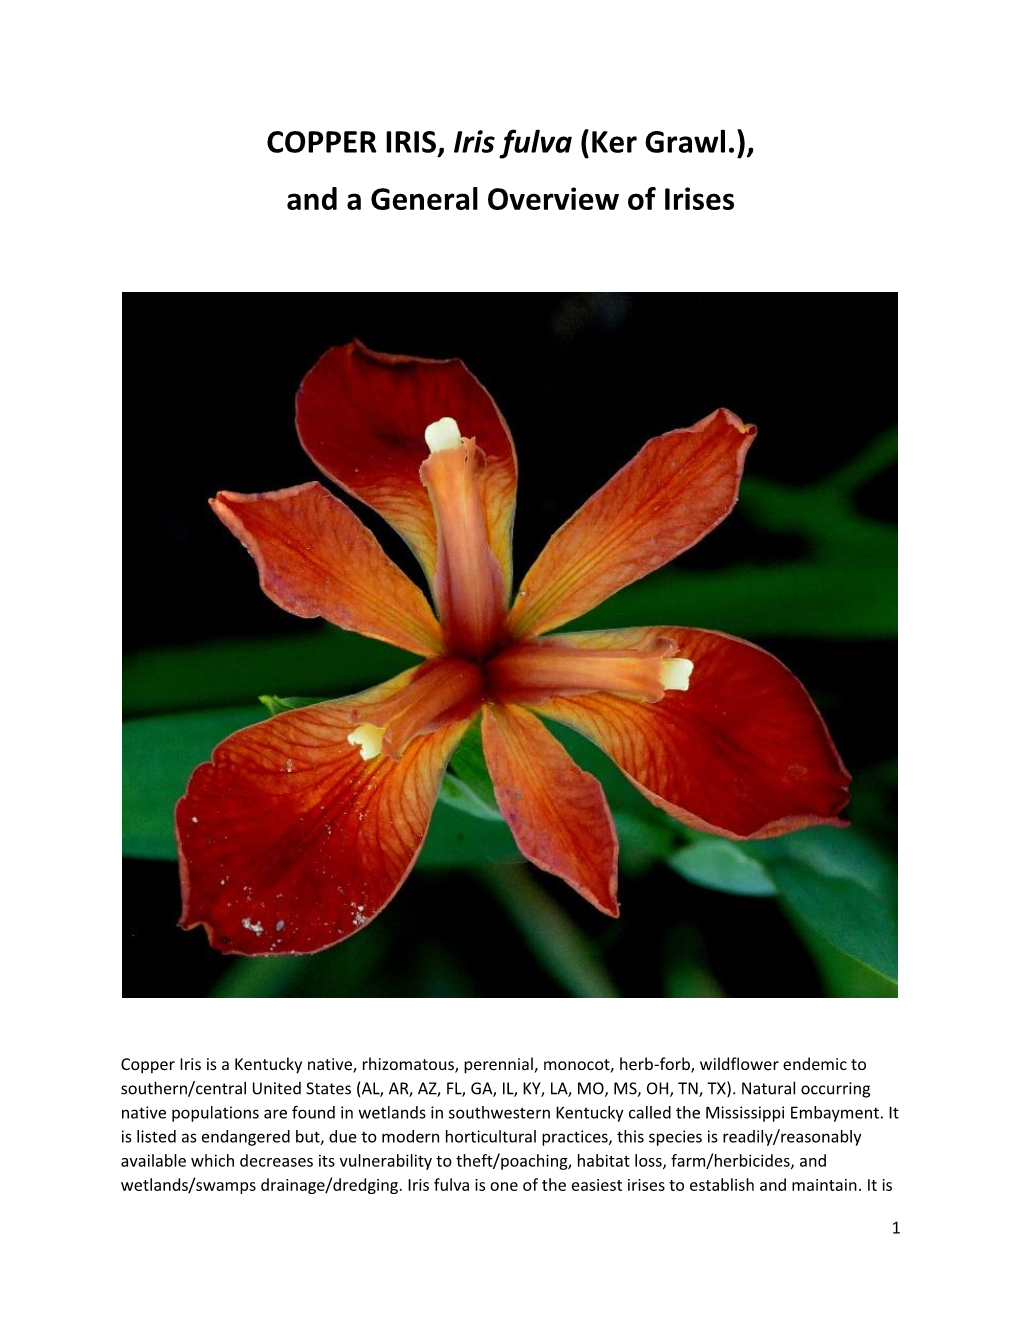 COPPER IRIS, Iris Fulva (Ker Grawl.), and a General Overview of Irises